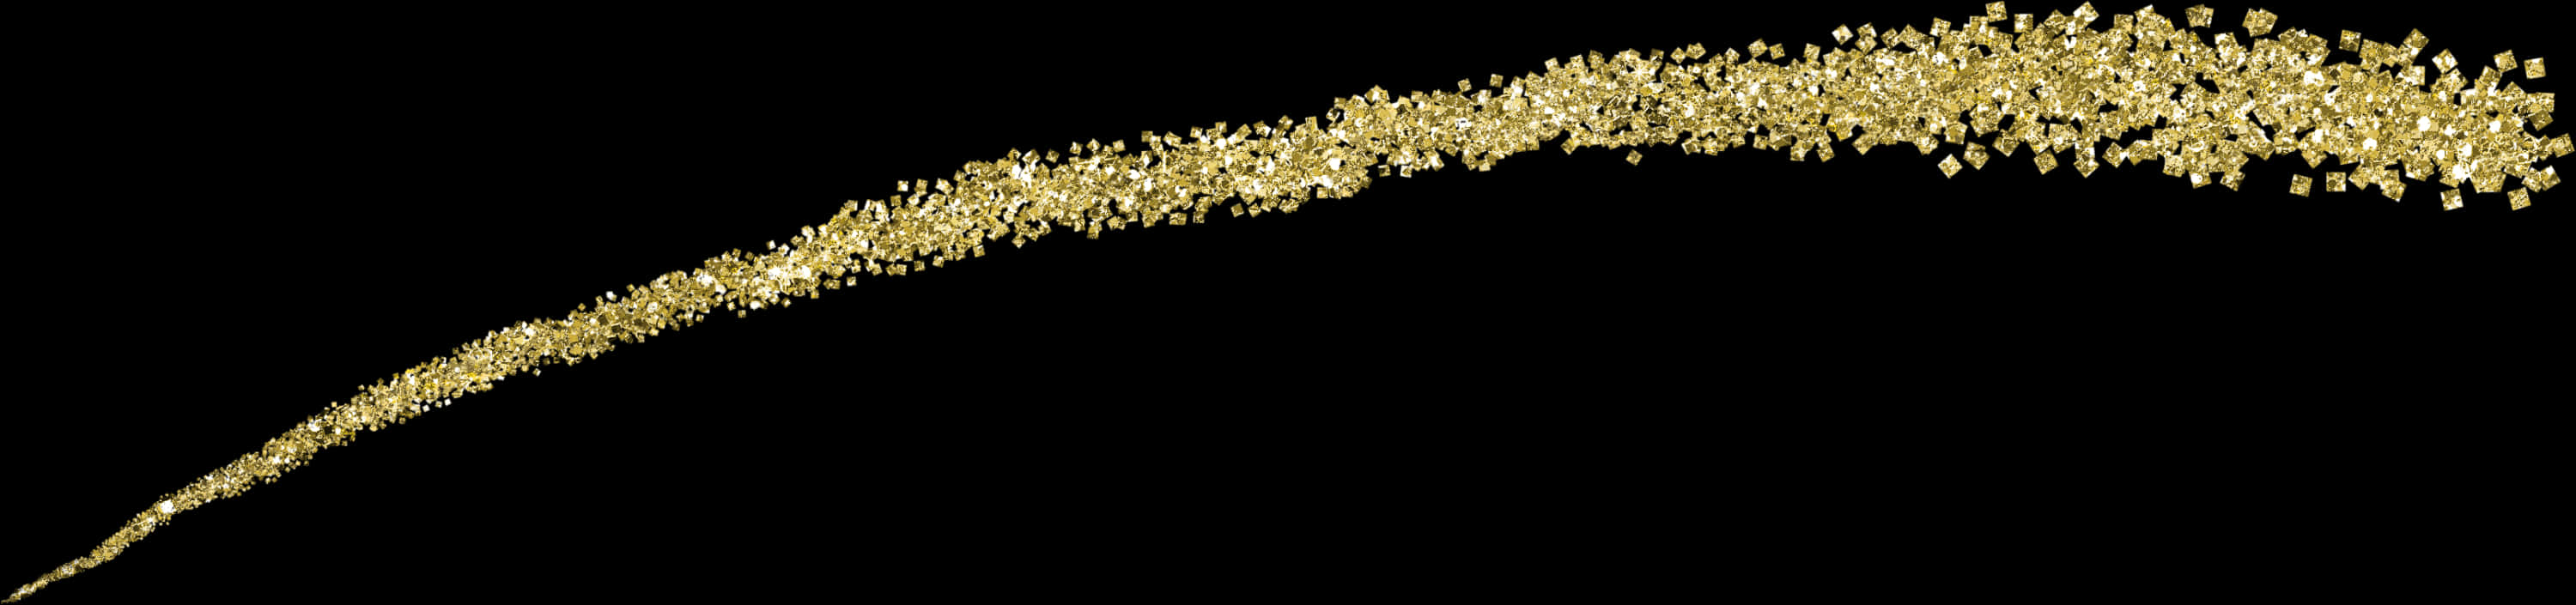 A Gold Glittery Line On A Black Background